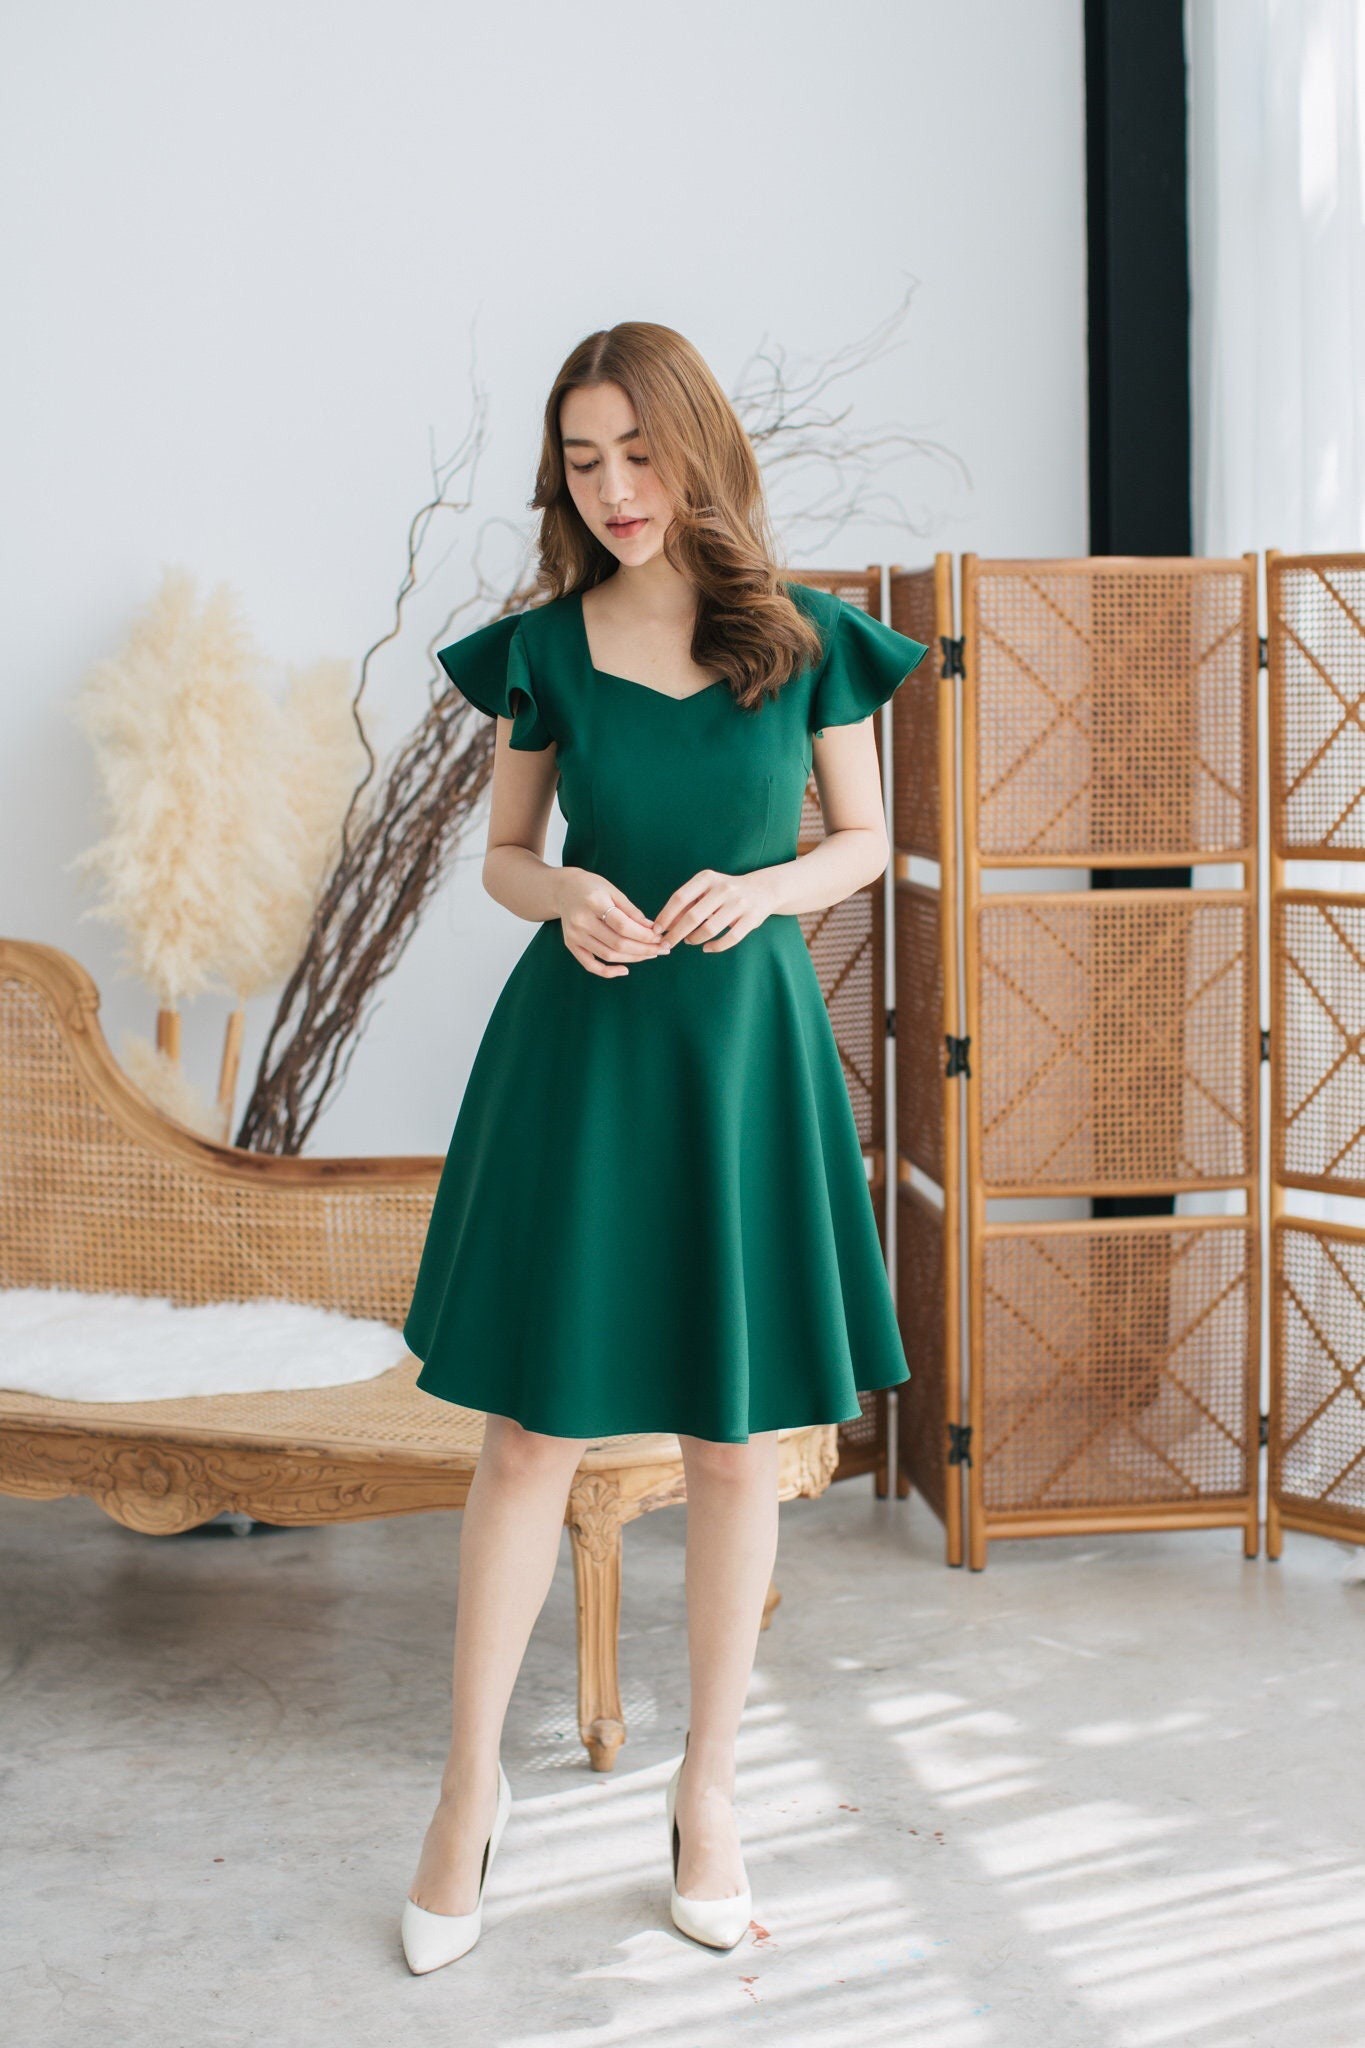 Cheap Halter Dark Green Homecoming Dress Short Prom Dress Party Dress,MH507  – Musebridals